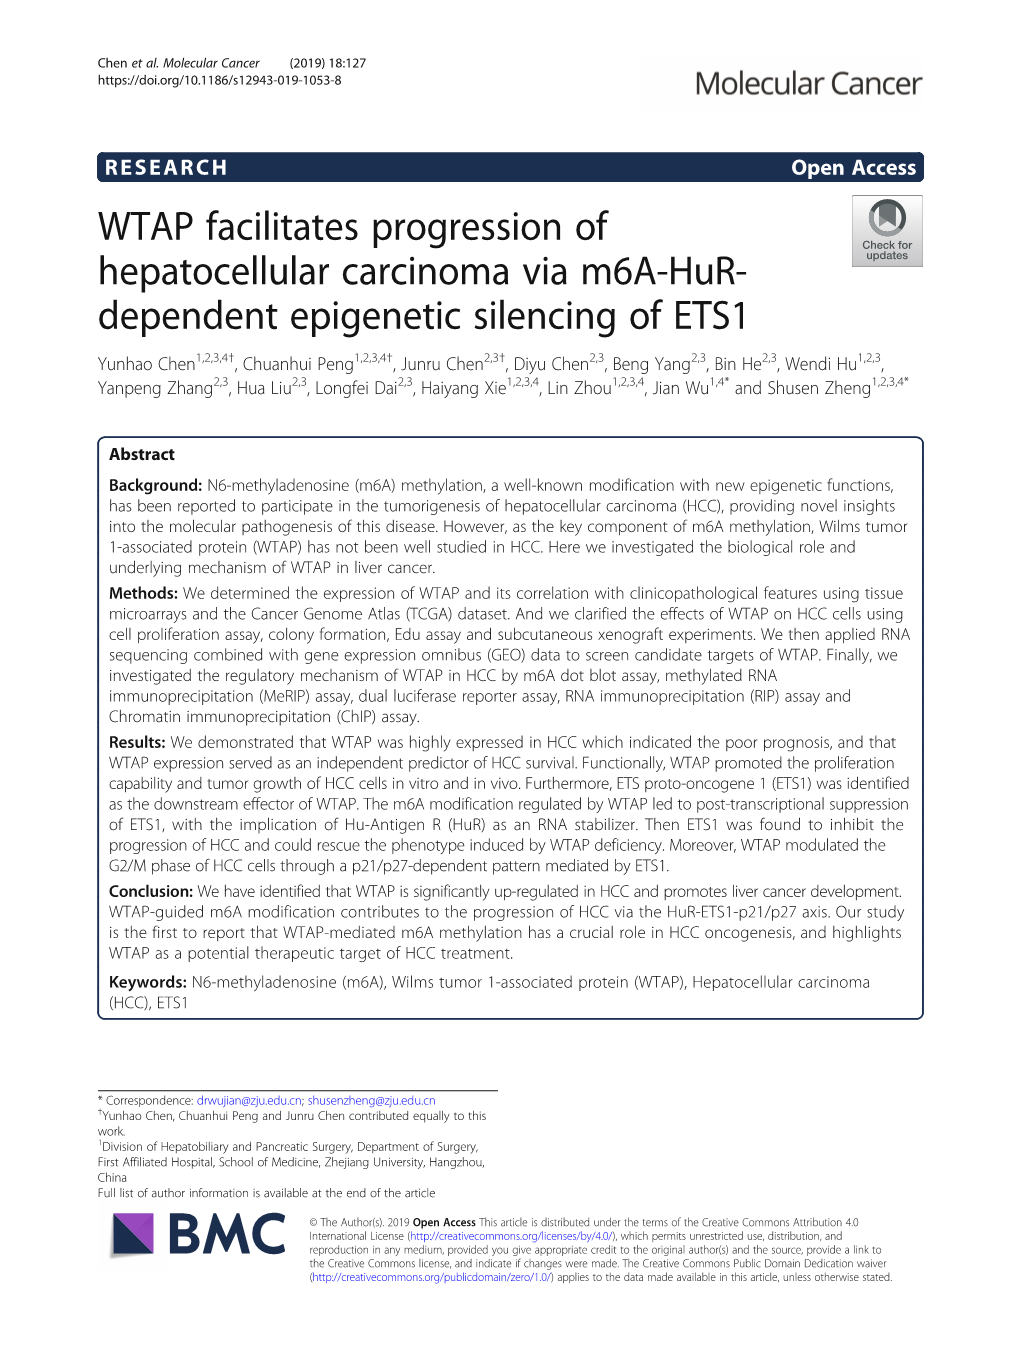 WTAP Facilitates Progression of Hepatocellular